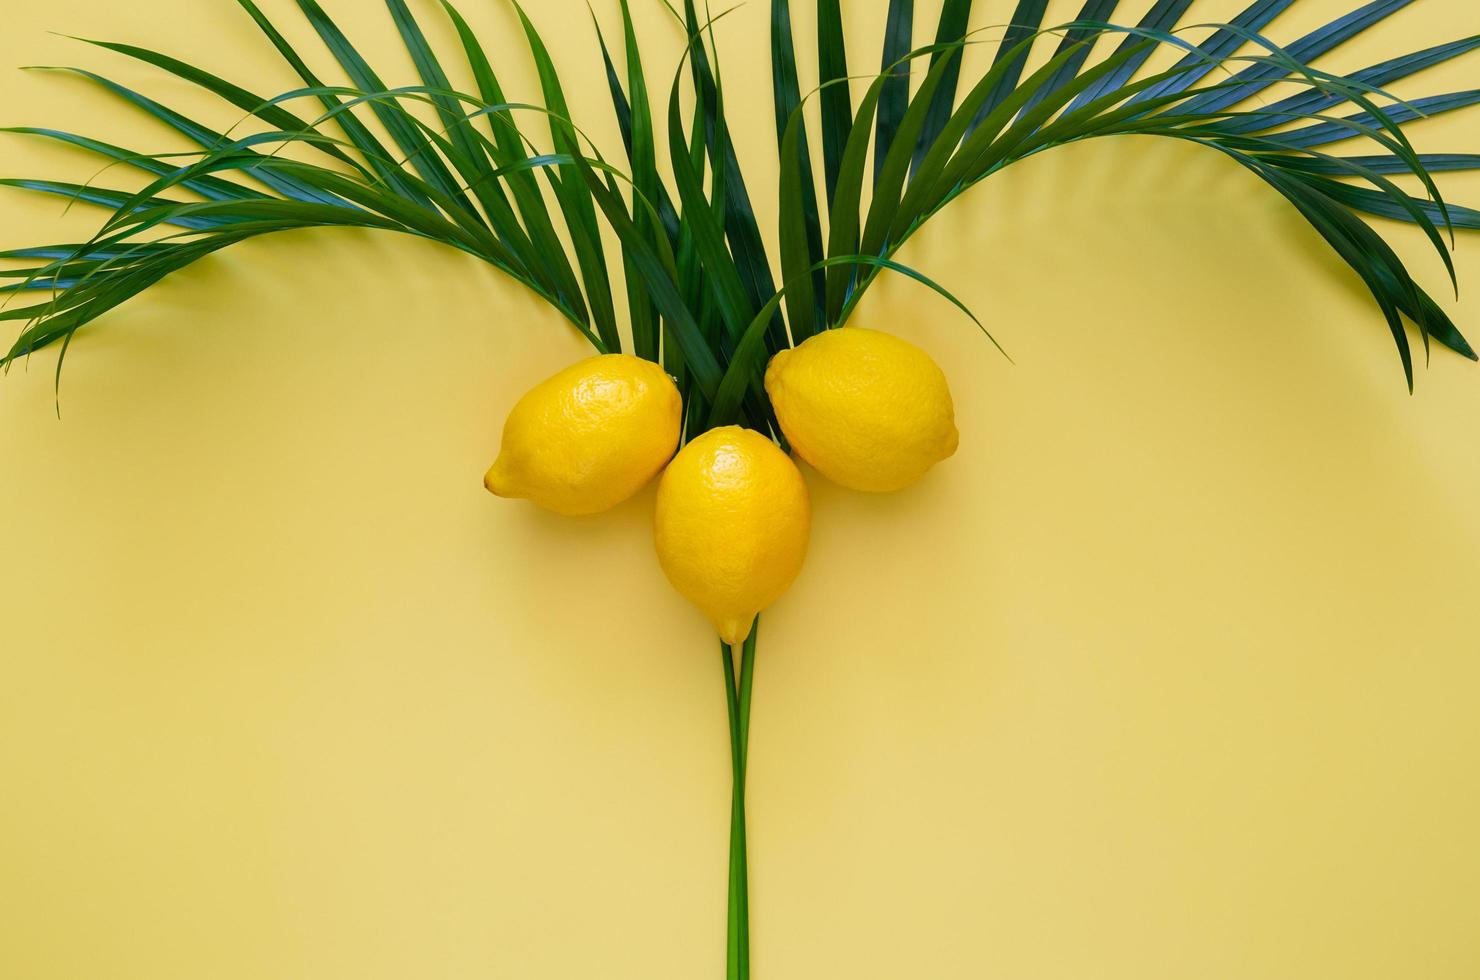 Lemons on coconut tree on yellow background. photo